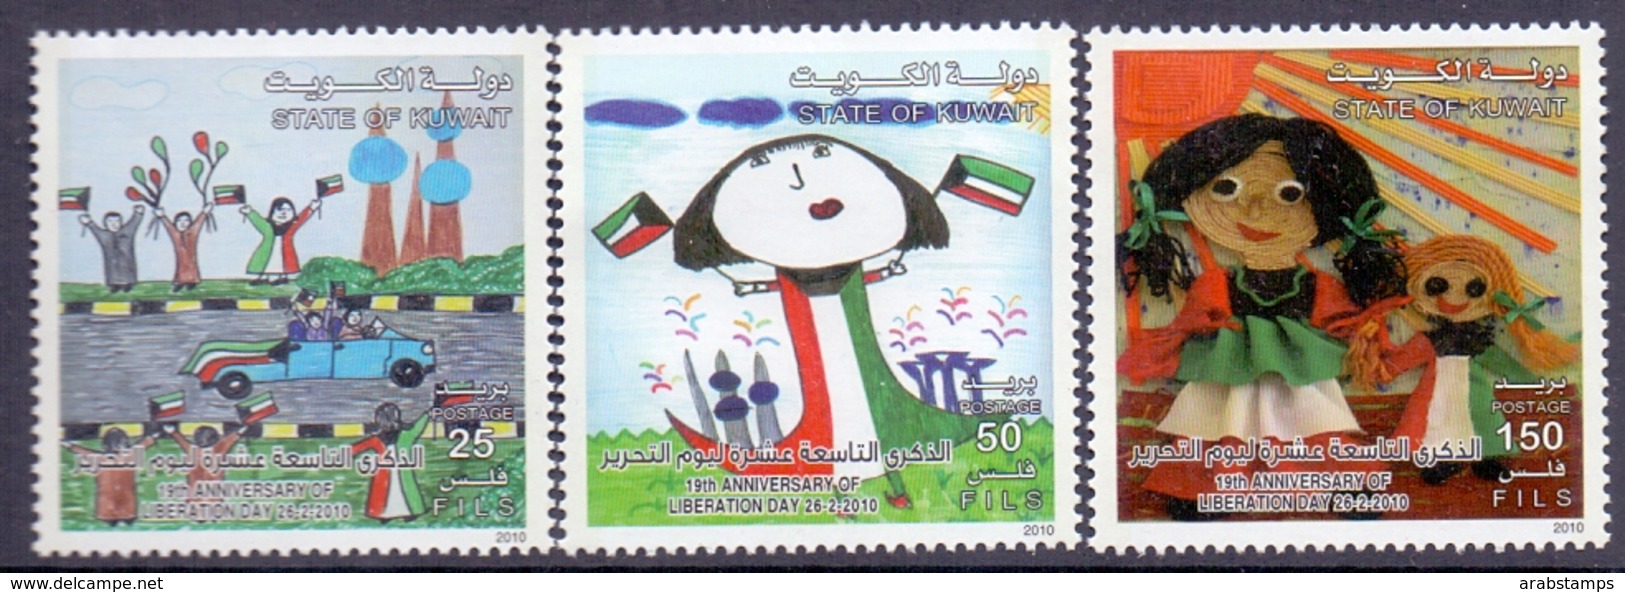 2010 Kuwait Anniversary Of The Liberation Day Complete Set 3 Values MNH - Kuwait